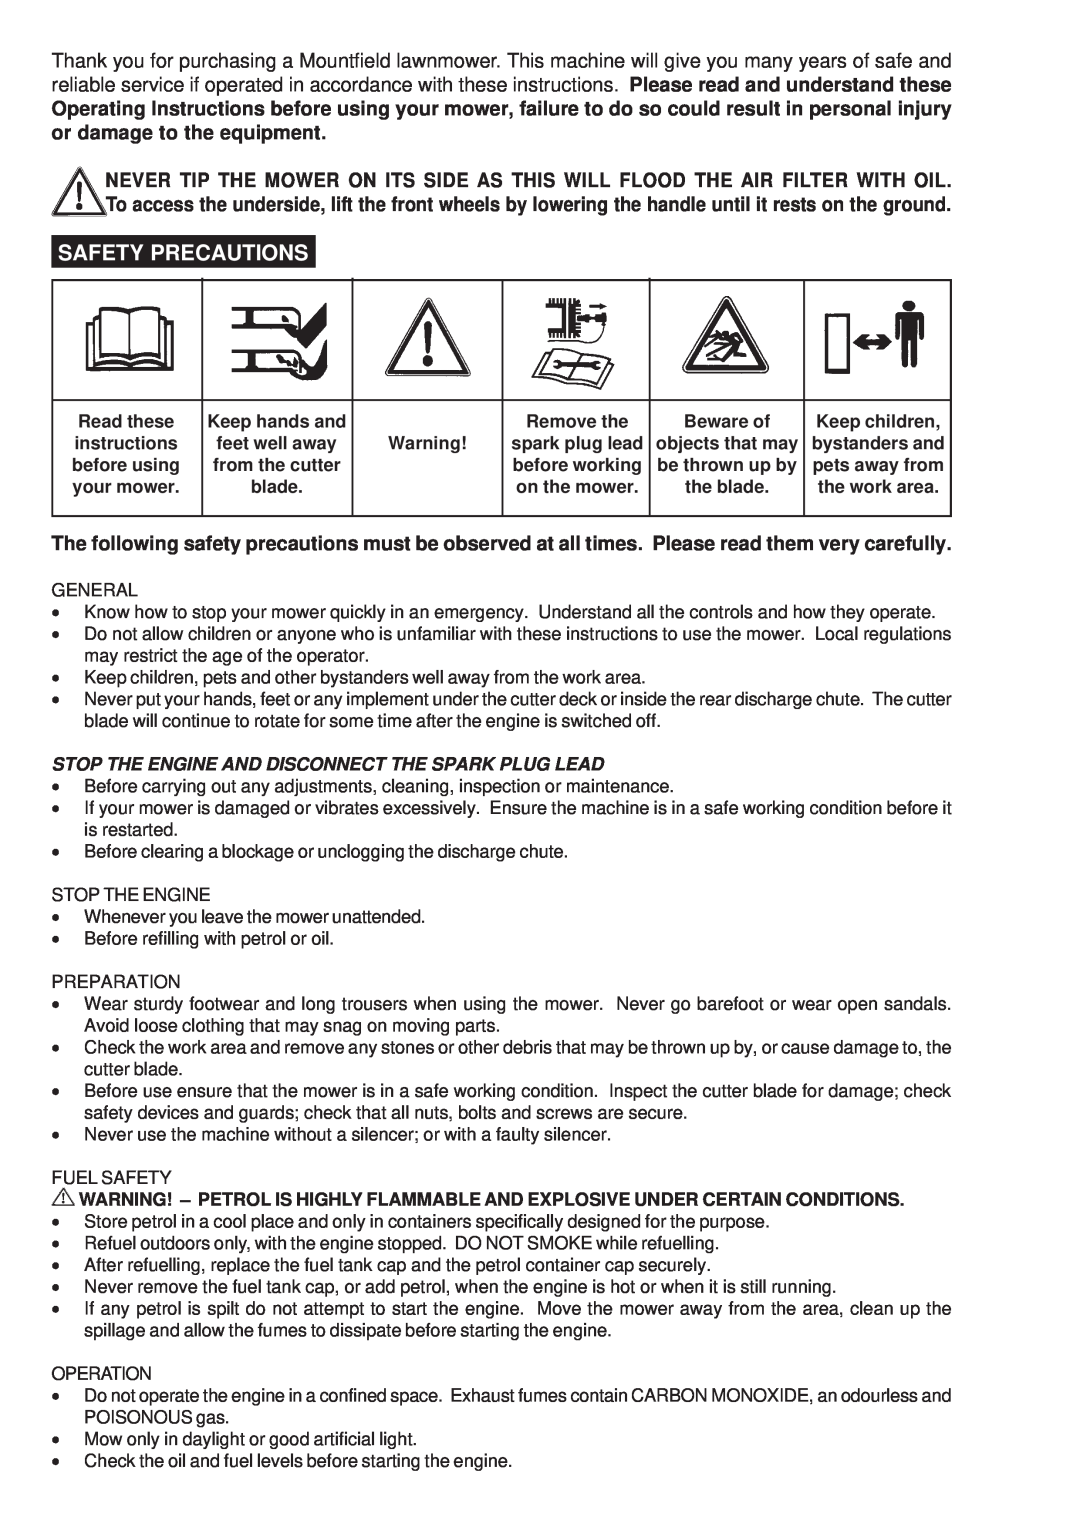 Mountfield SP474 manual Safety Precautions 